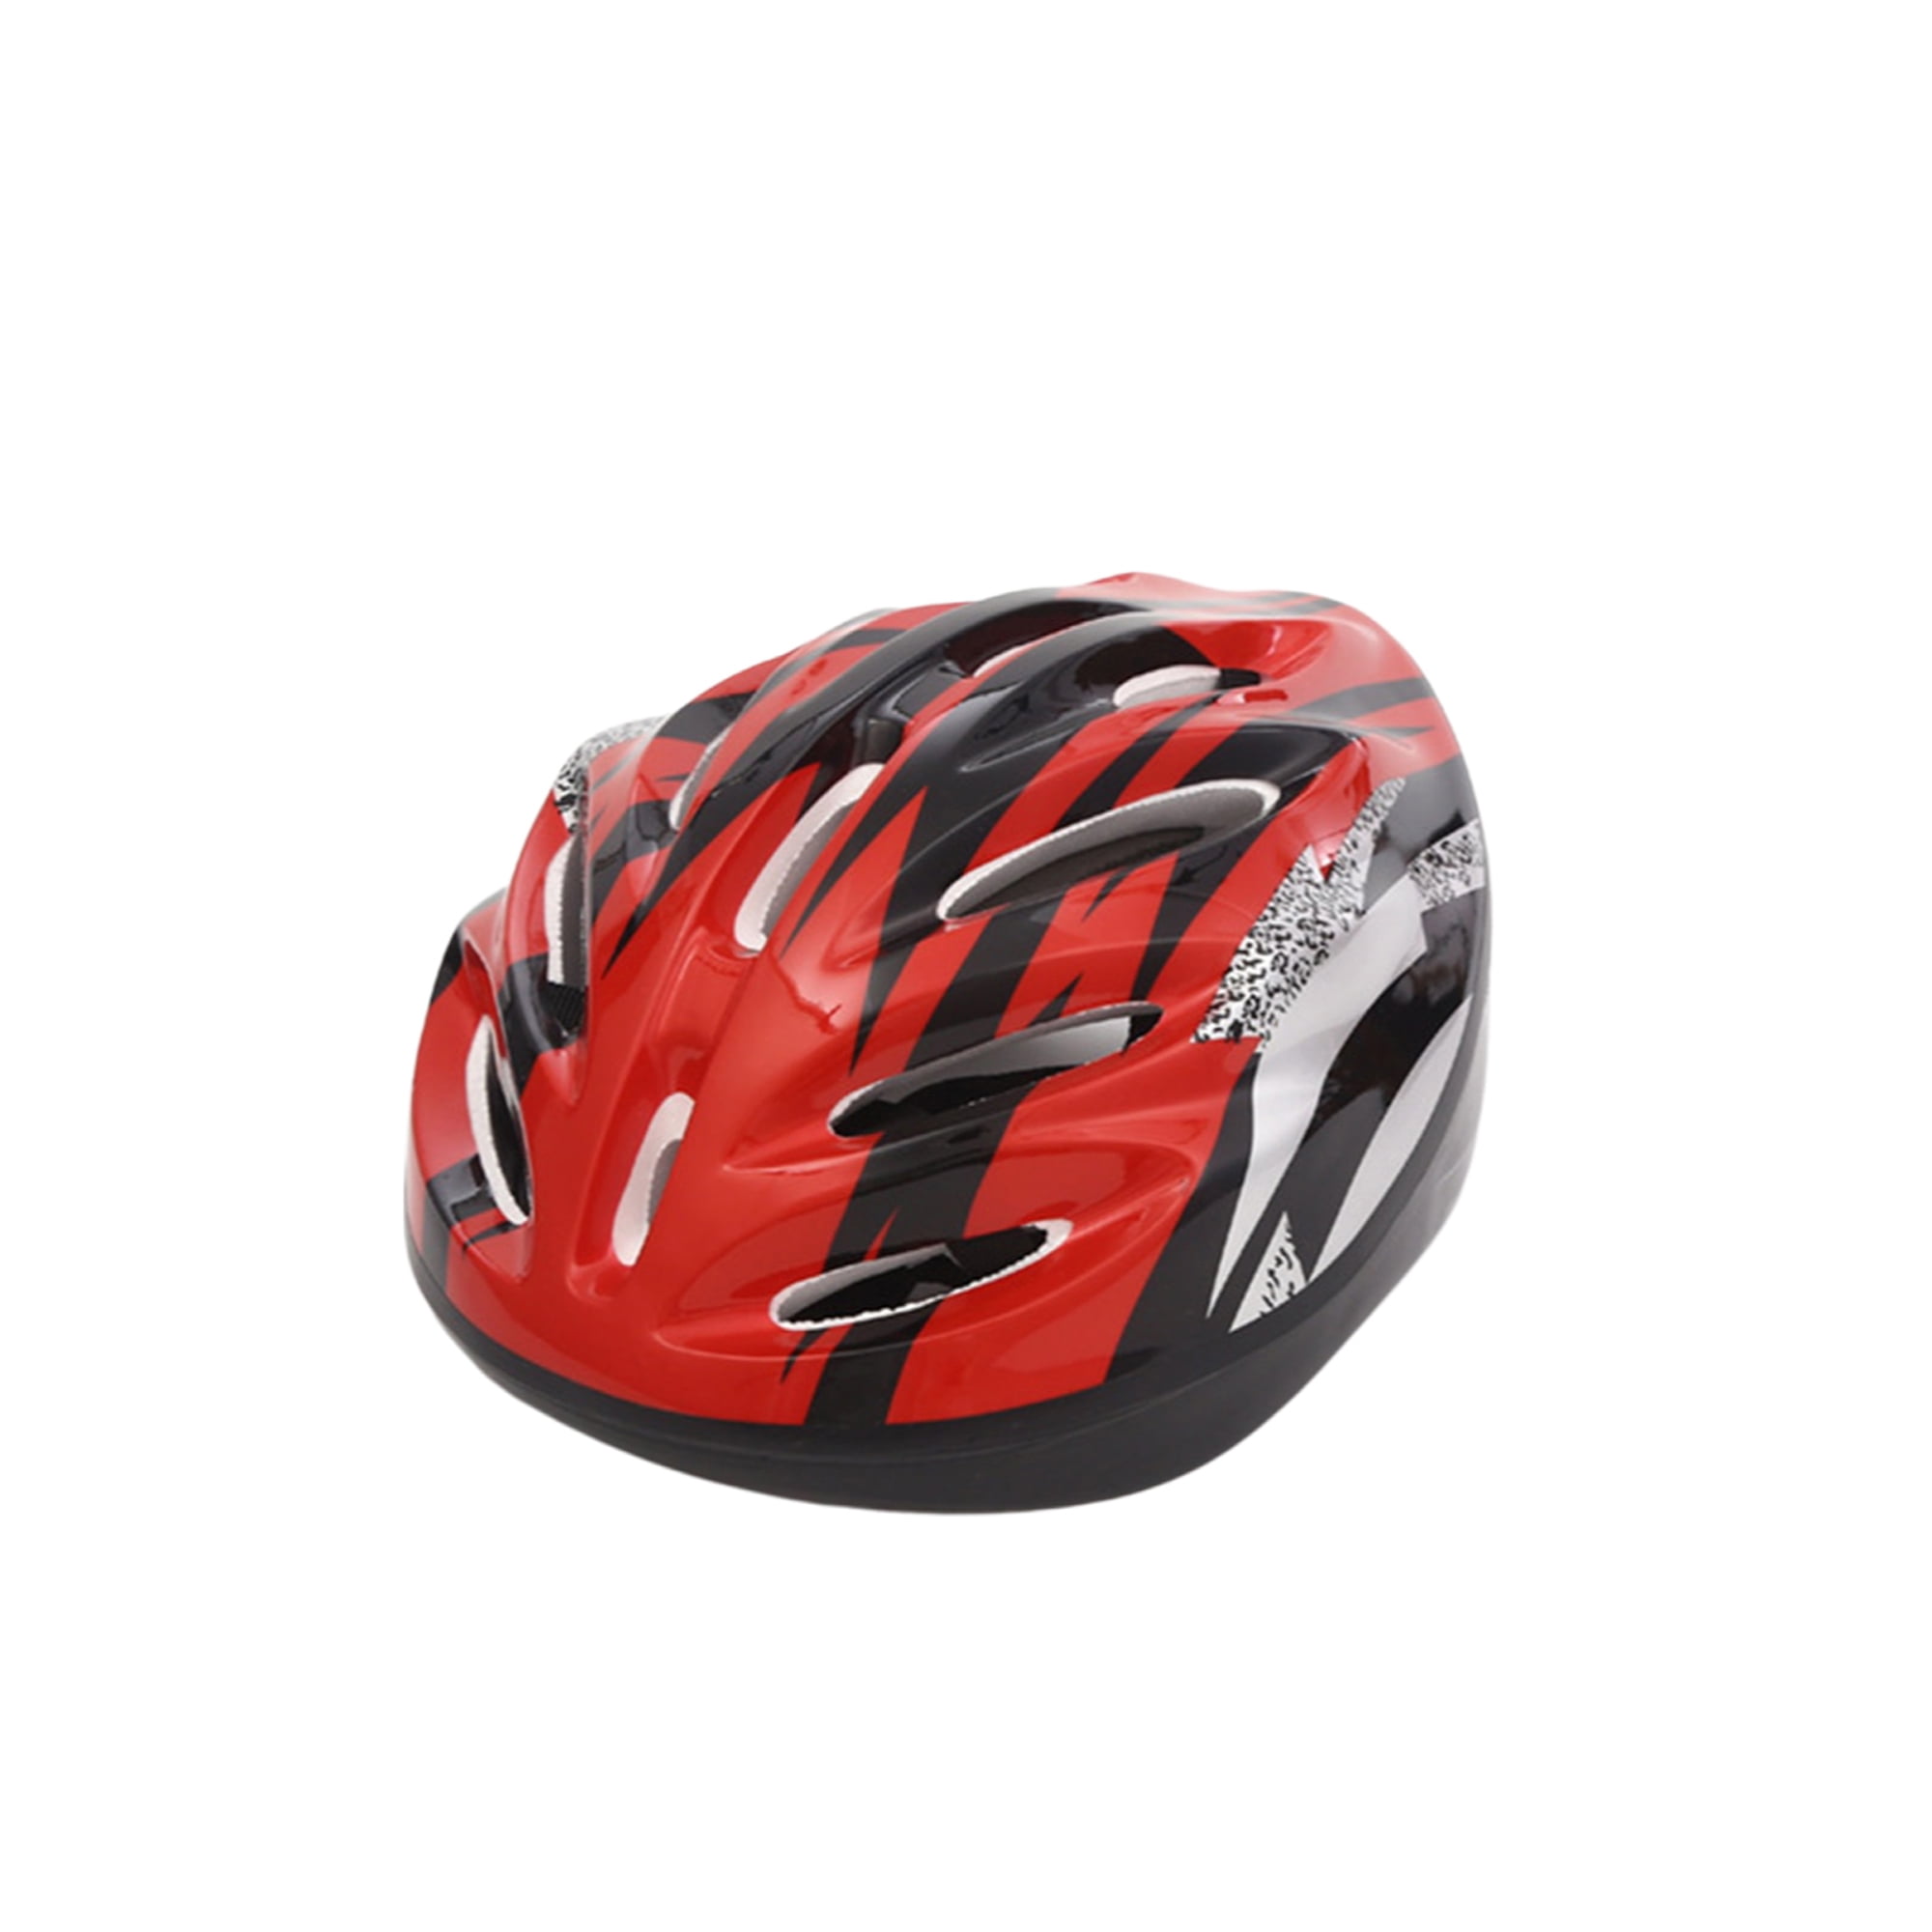 Adults Cycling Bike Helmet Lightweight Adjustable Safety Helmet Outdoor Sports 